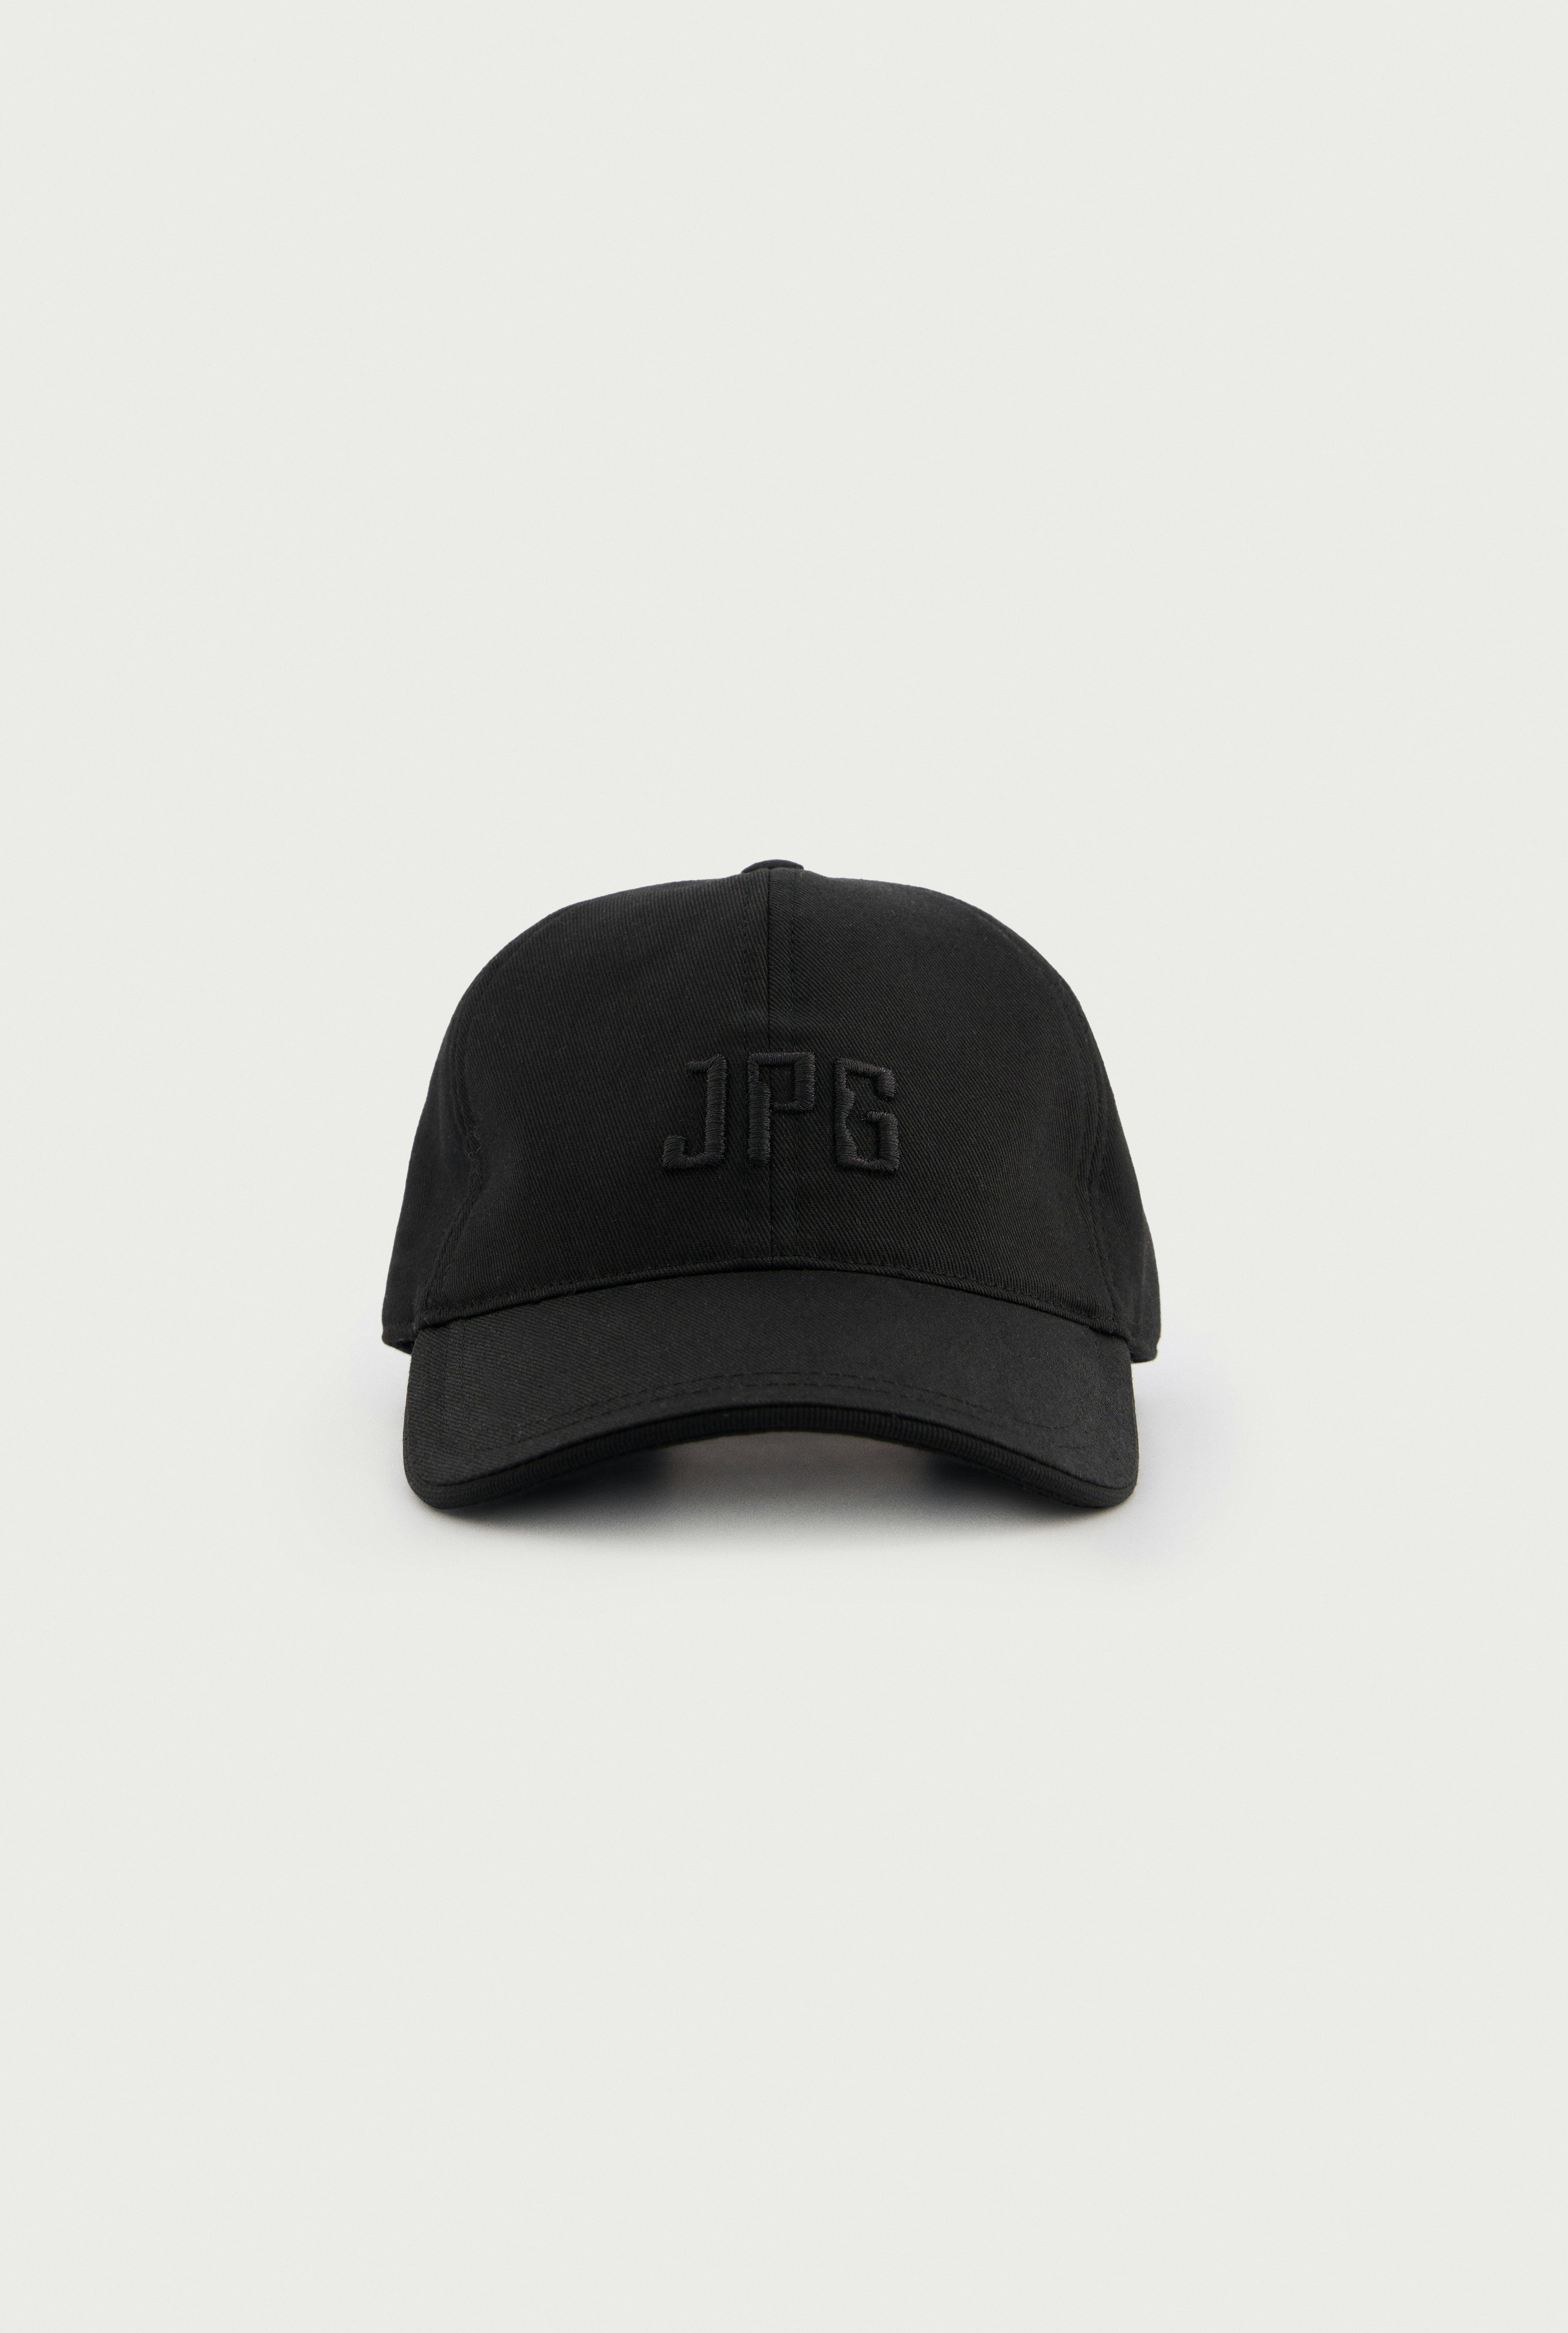 The Black JPG Cap